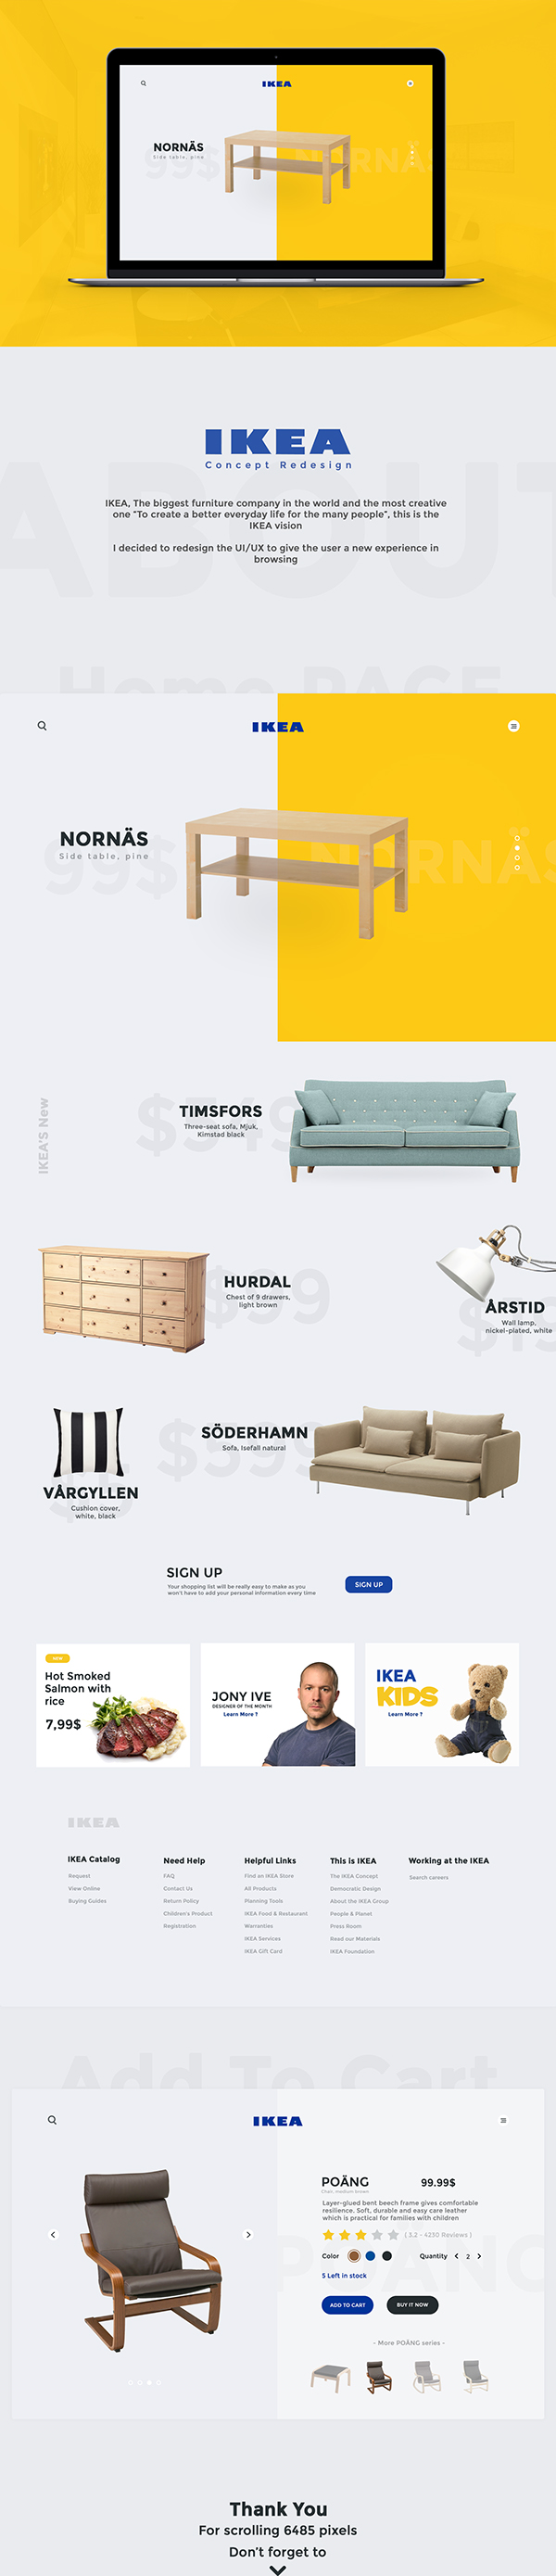 IKEA Concept Redesign